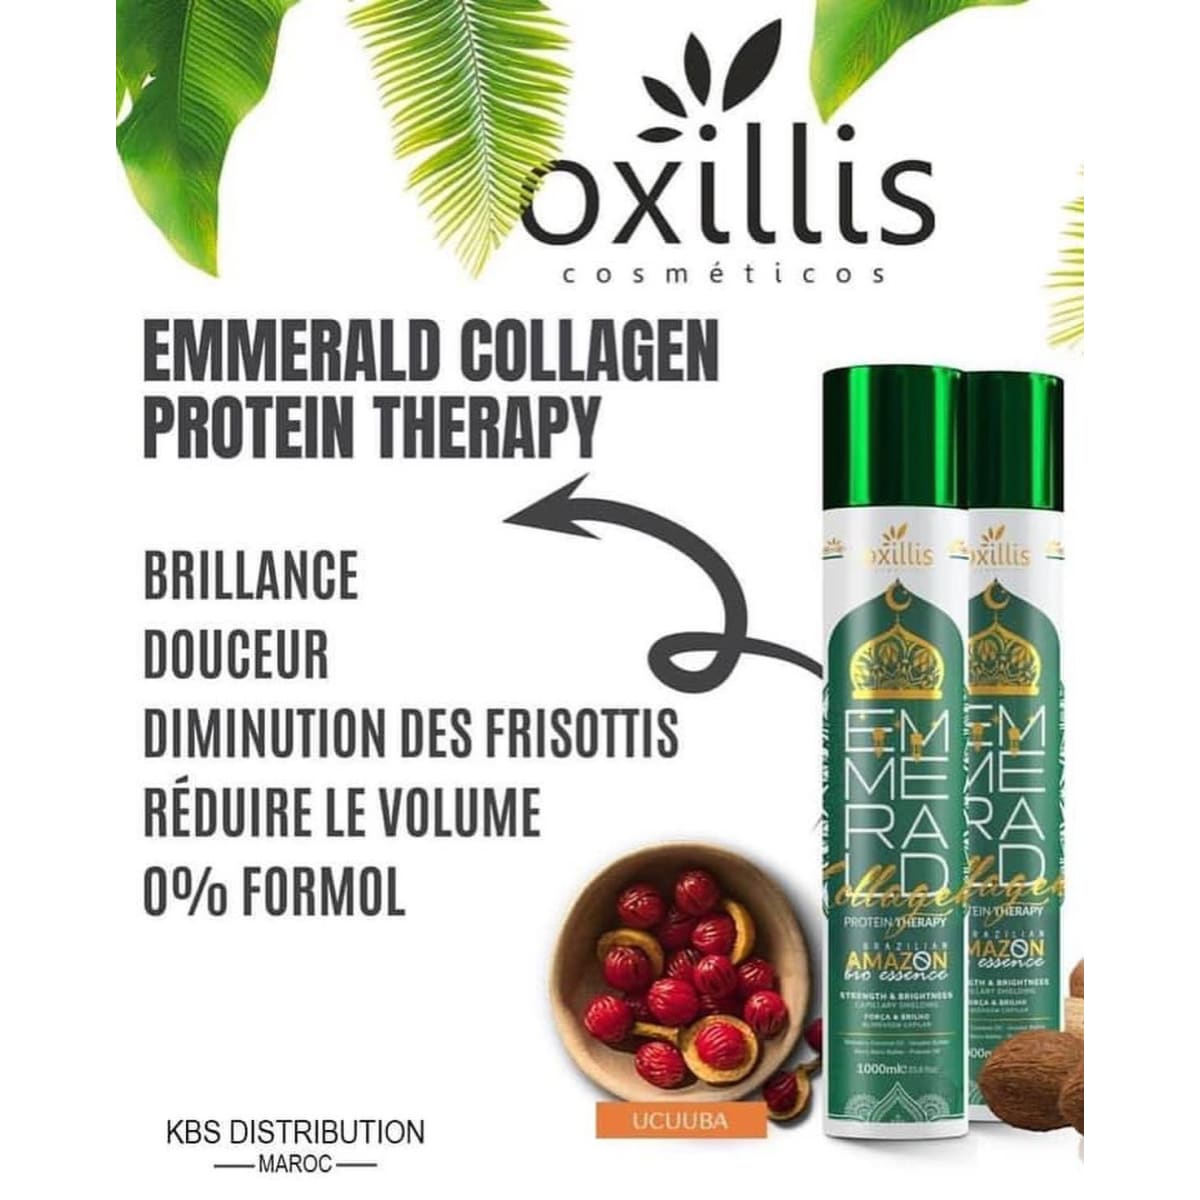 Oxillis Emmerald 1L Protein Therapy Brazilian Shop